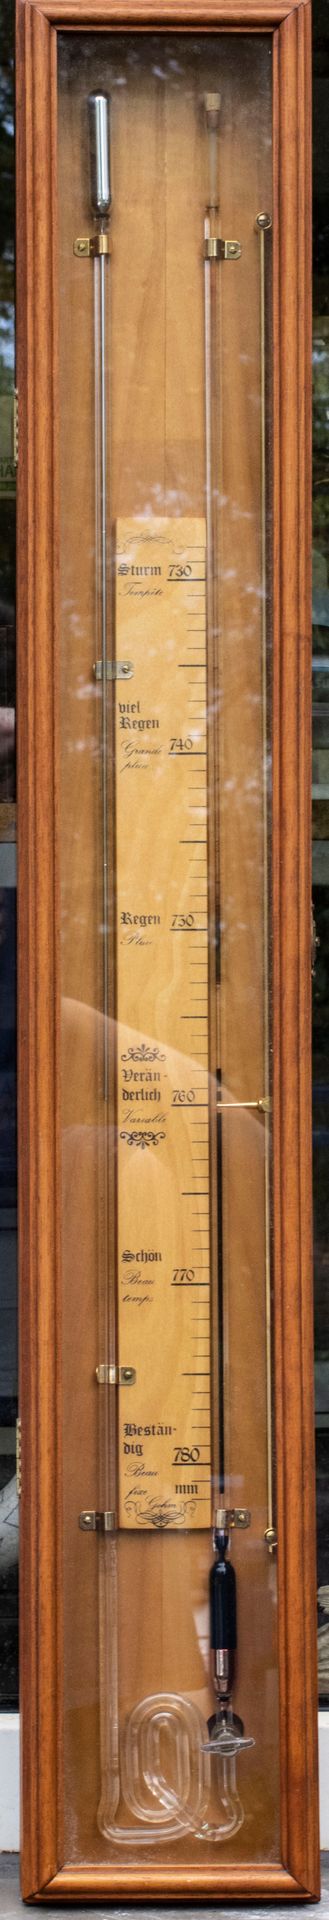 Luftdruckmesser / Barometer, Gohm, 20. Jh. Material: barometer in wooden case wi&hellip;